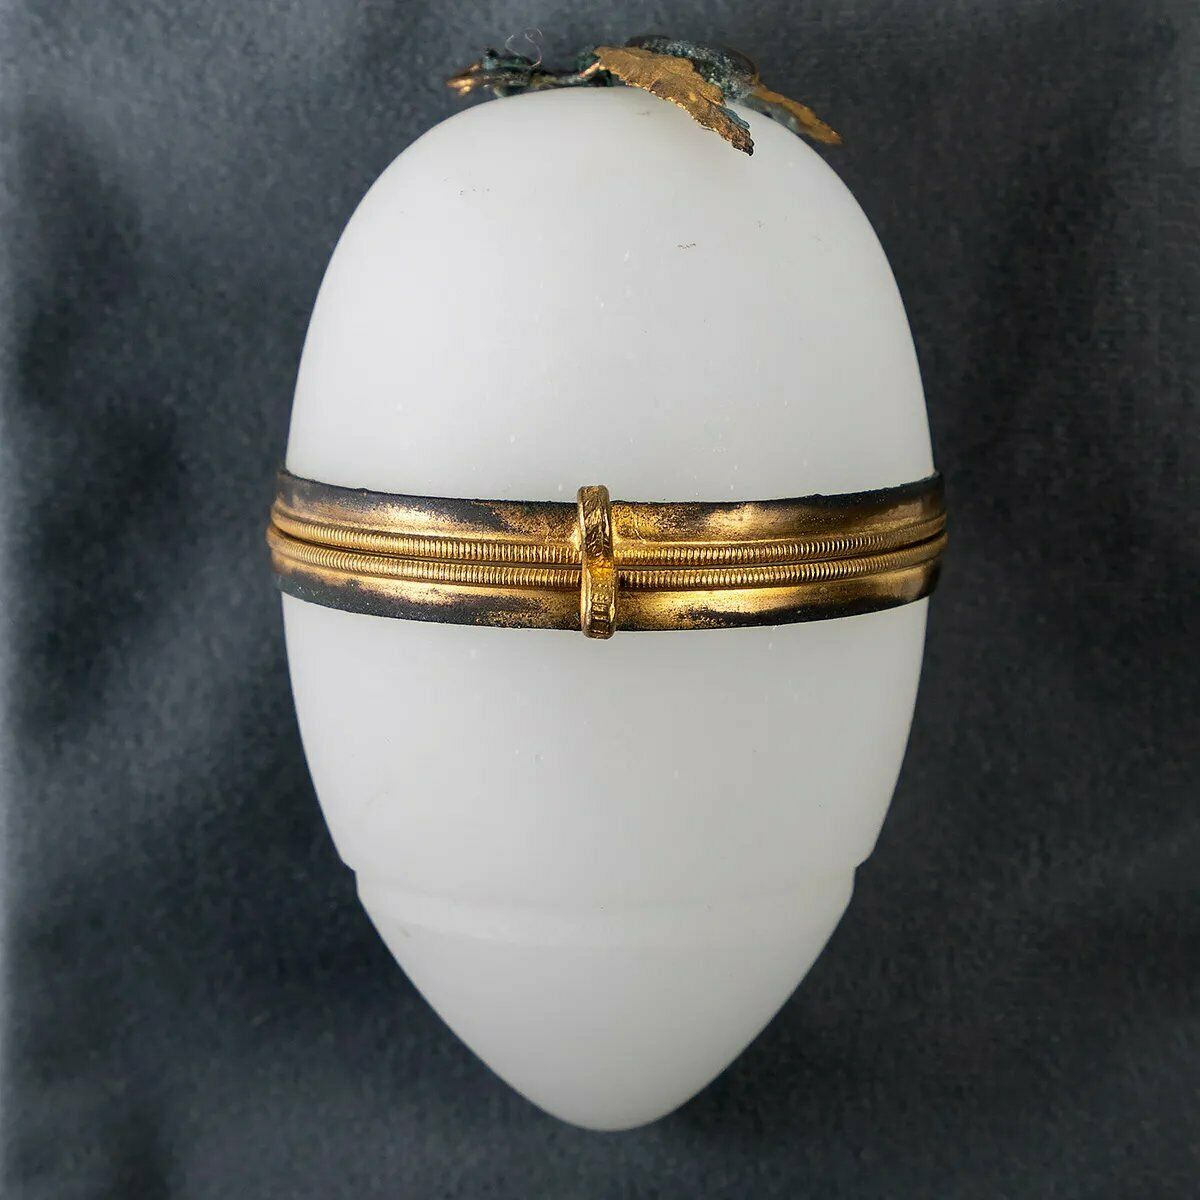 Antique French Napoleon III Era White Opaline Glass “Egg” Casket, Box or Etui